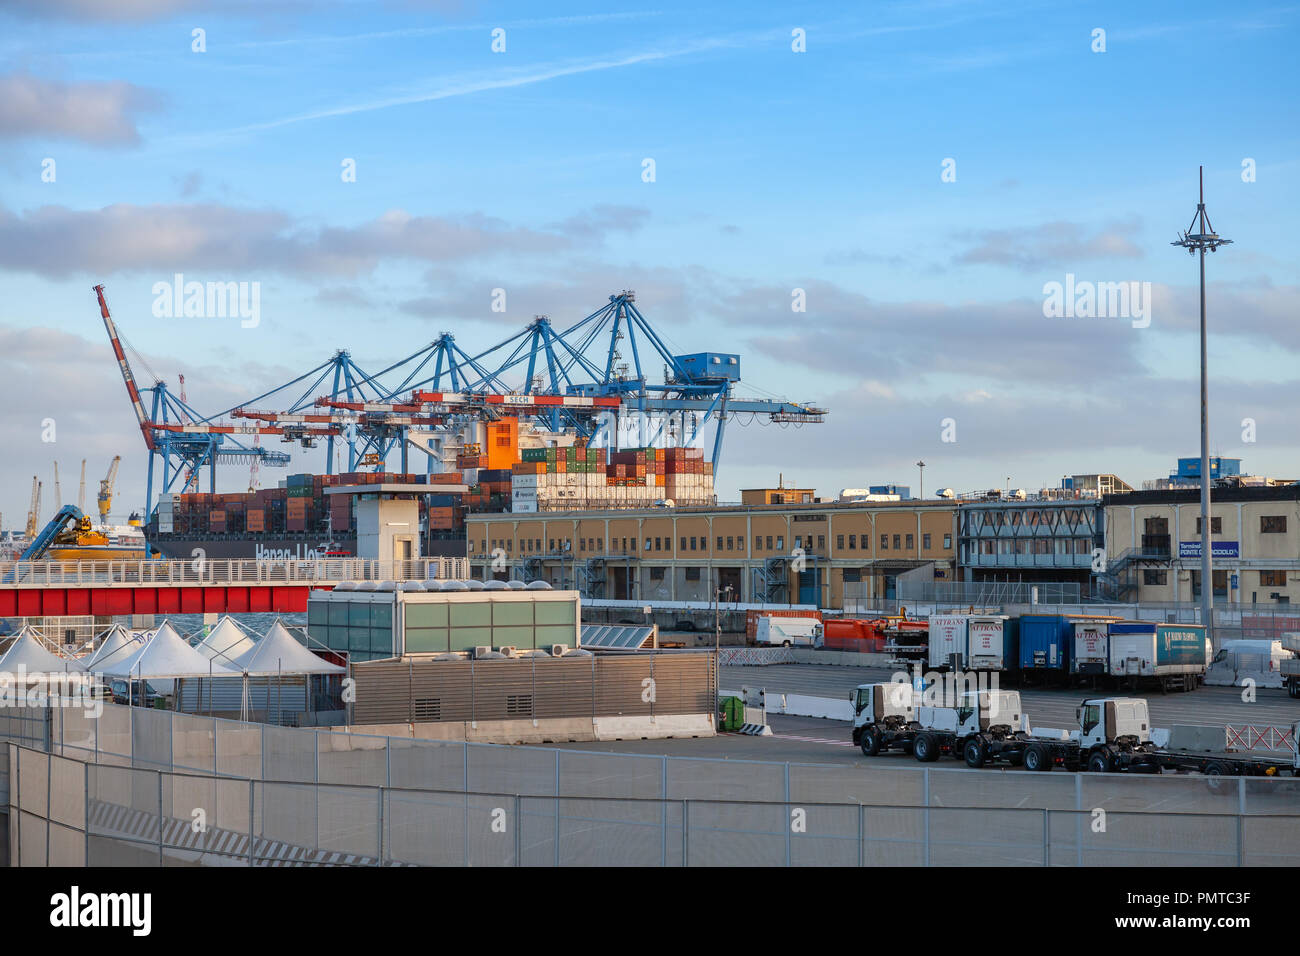 Genova, Italy - January 18, 2018: Genova port view with blue gantry cranes Stock Photo